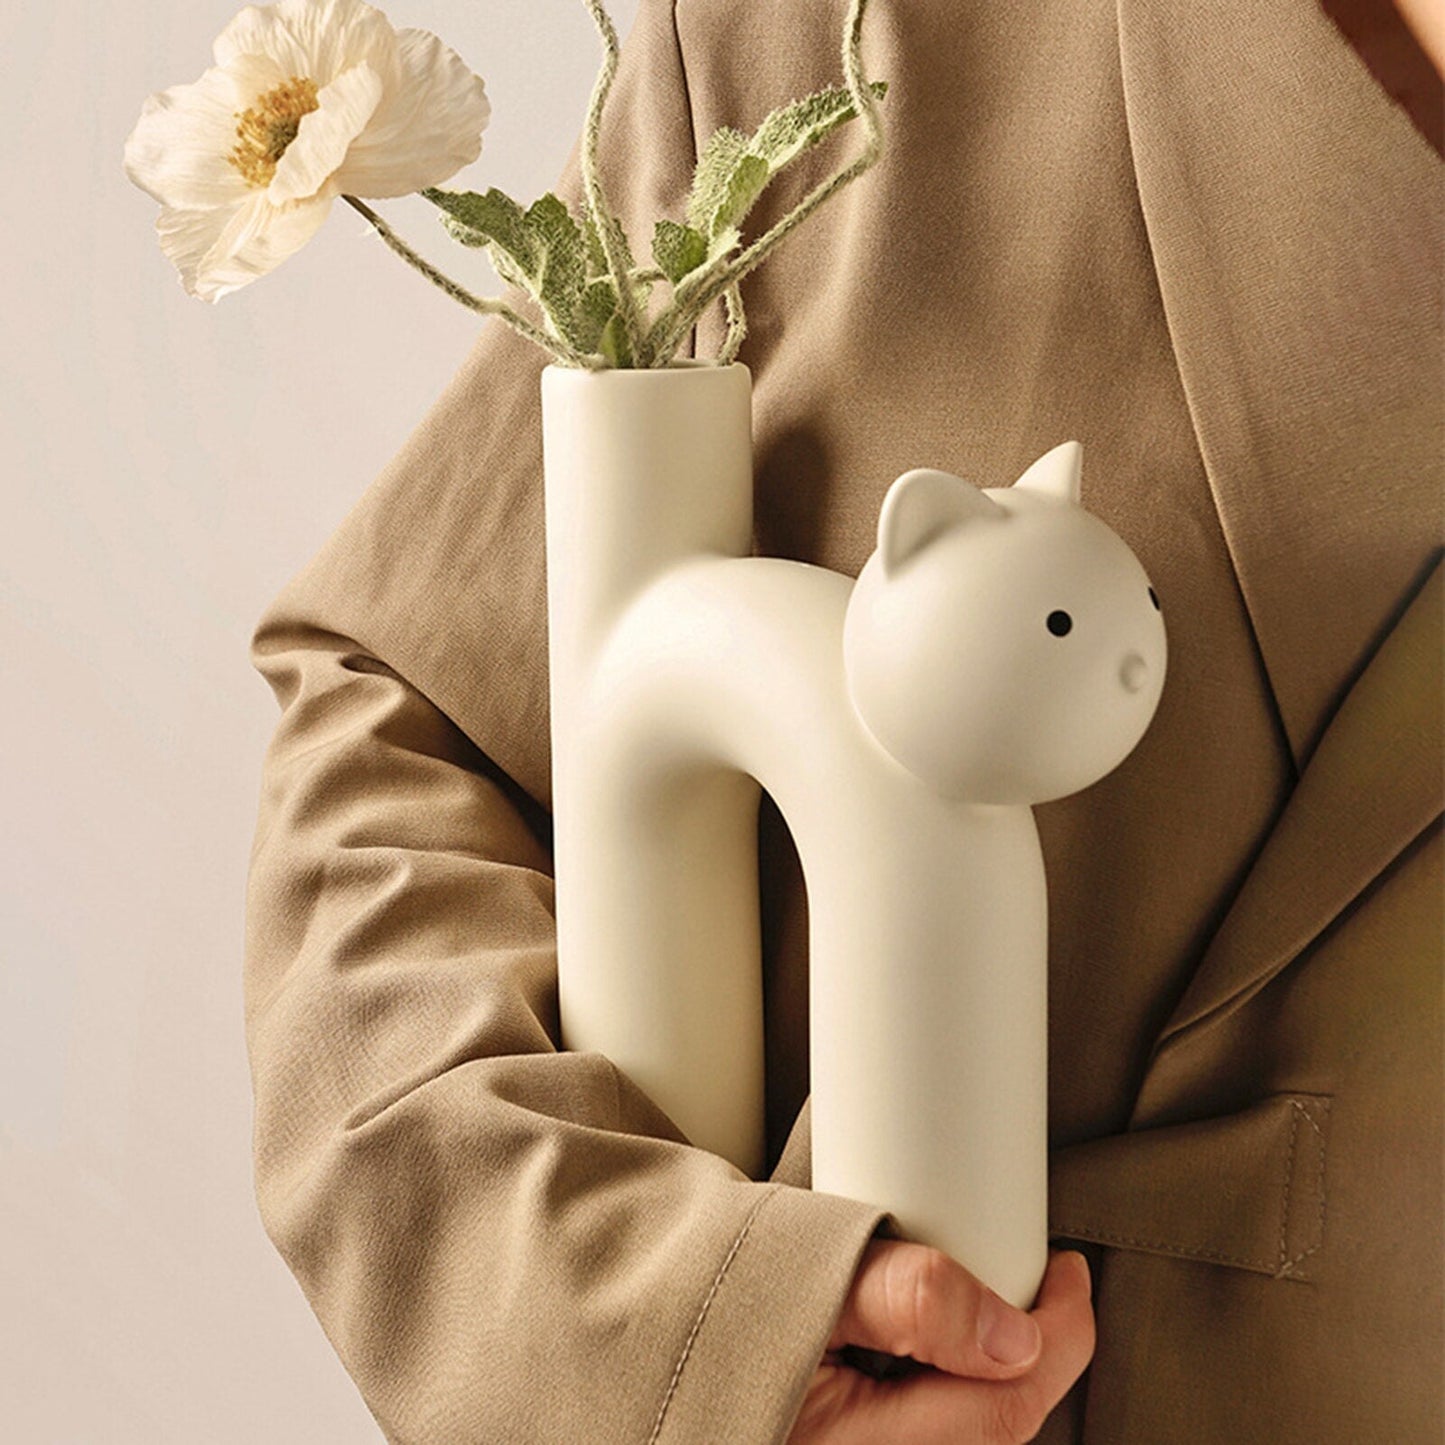 Vas keramik modern bentuk kucing tubular lucu untuk ornamen ruang tamu kantor nordik pot bunga kerajinan seni kerajinan bunga kerajinan